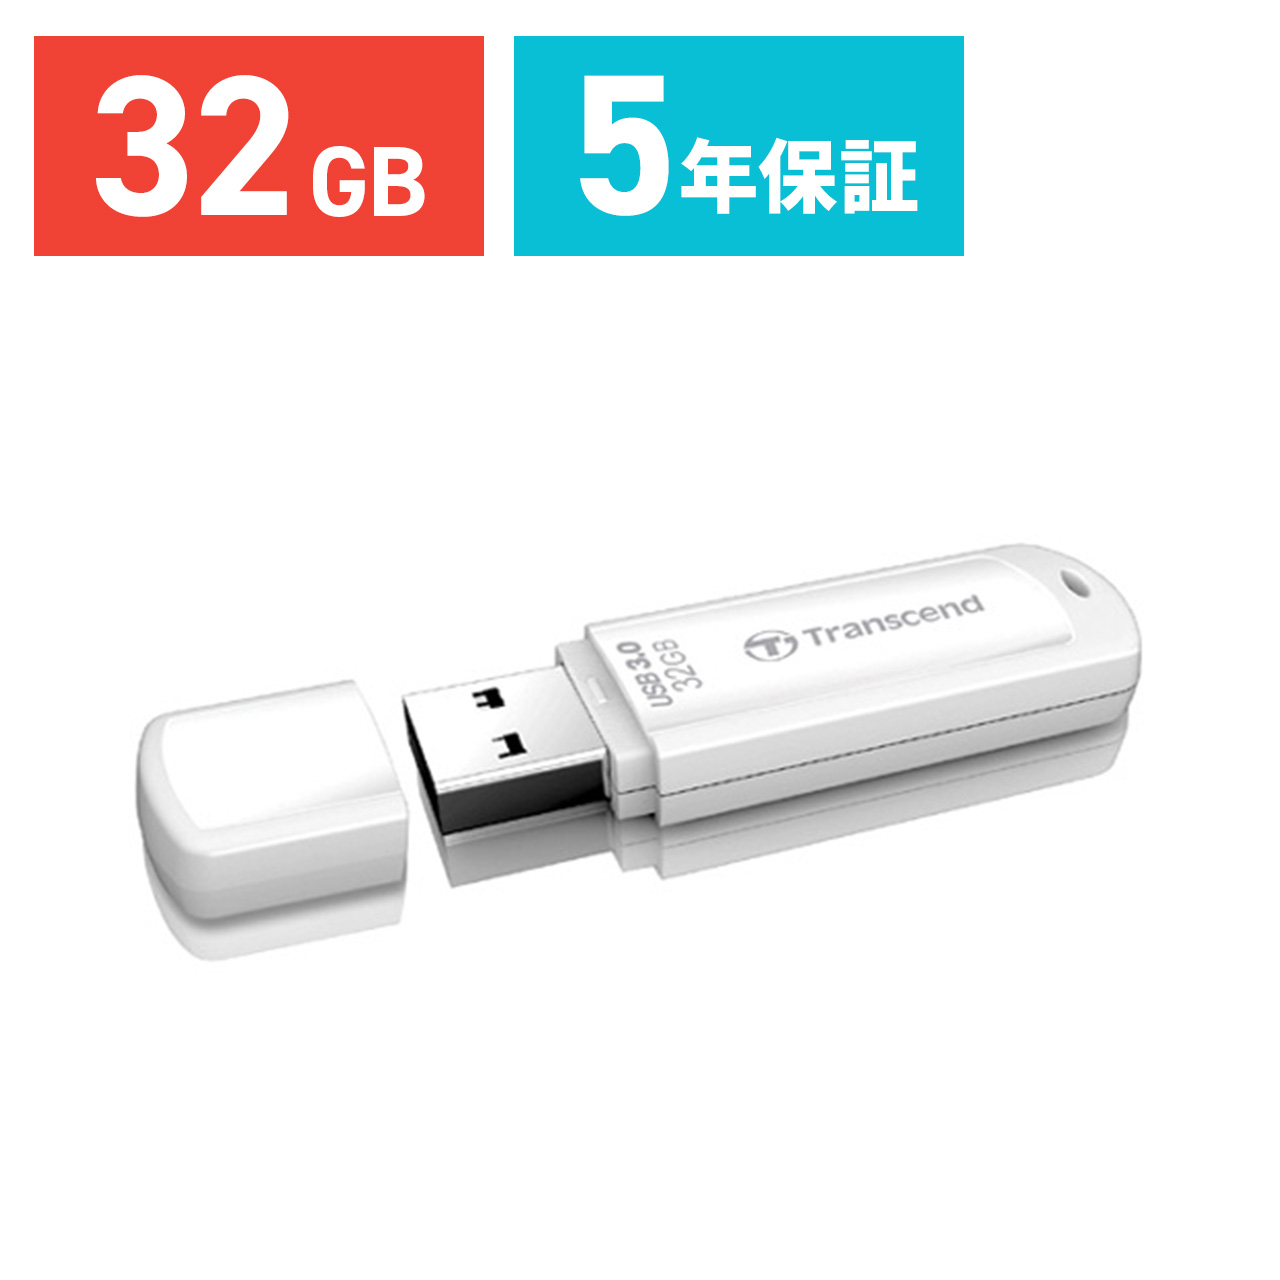 TS32GJF730 ネコポス専用 送料無料対象品 Transcend USBメモリ 32GB 日本産 【返品不可】 USB3.0 JetFlash730 おしゃれ 卒業 光沢ホワイトボディ USBメモリー 大容量 高速 入学